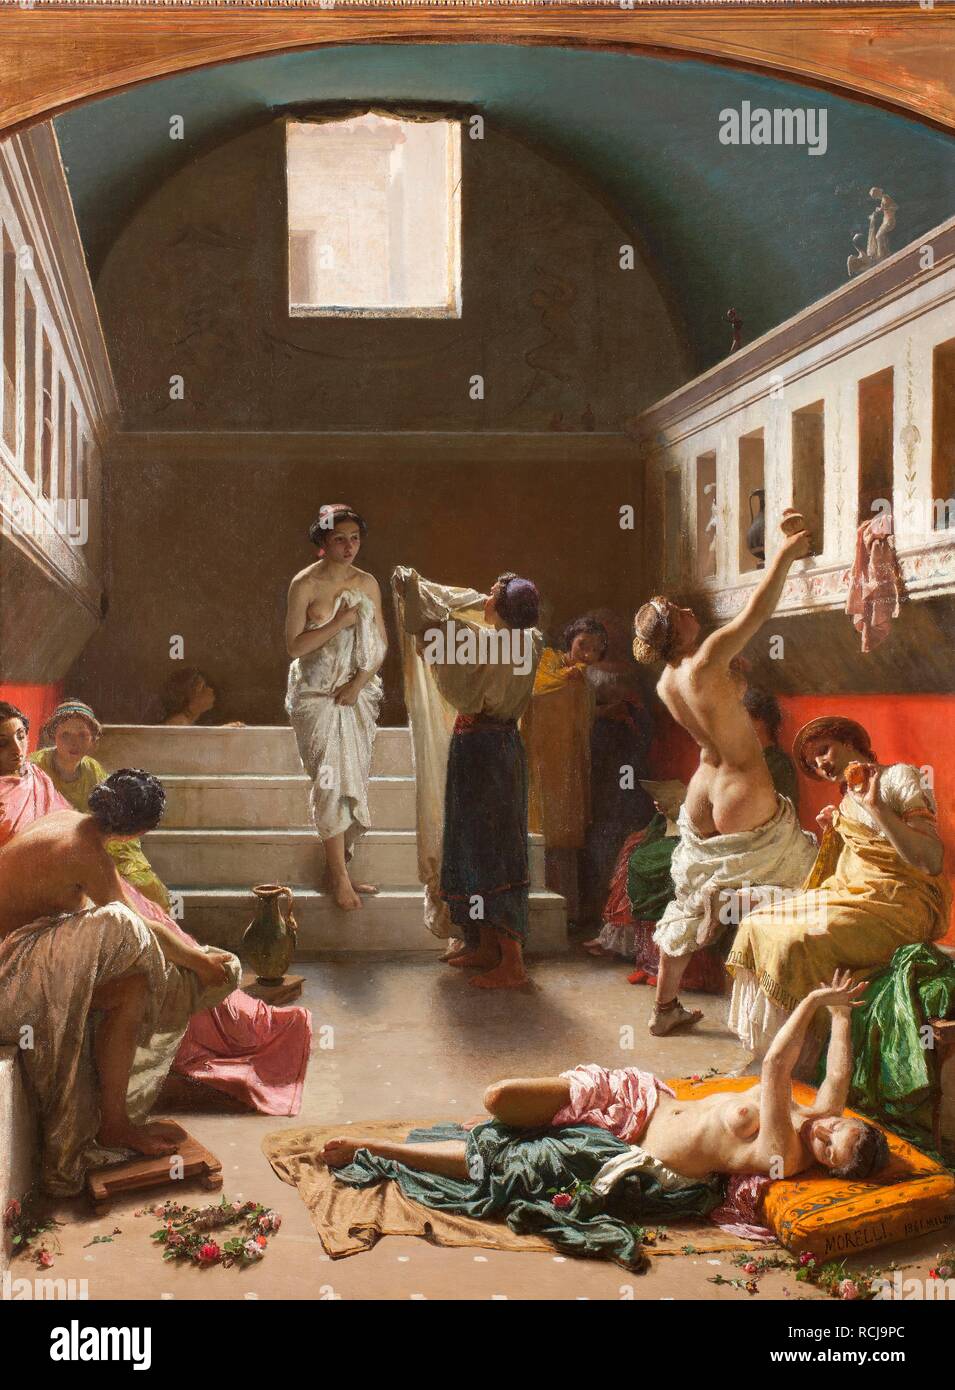 Die Bäder von Pompeji. Museum: Fondazione Balzan, Milano. Autor: MORELLI, Domenico. Stockfoto